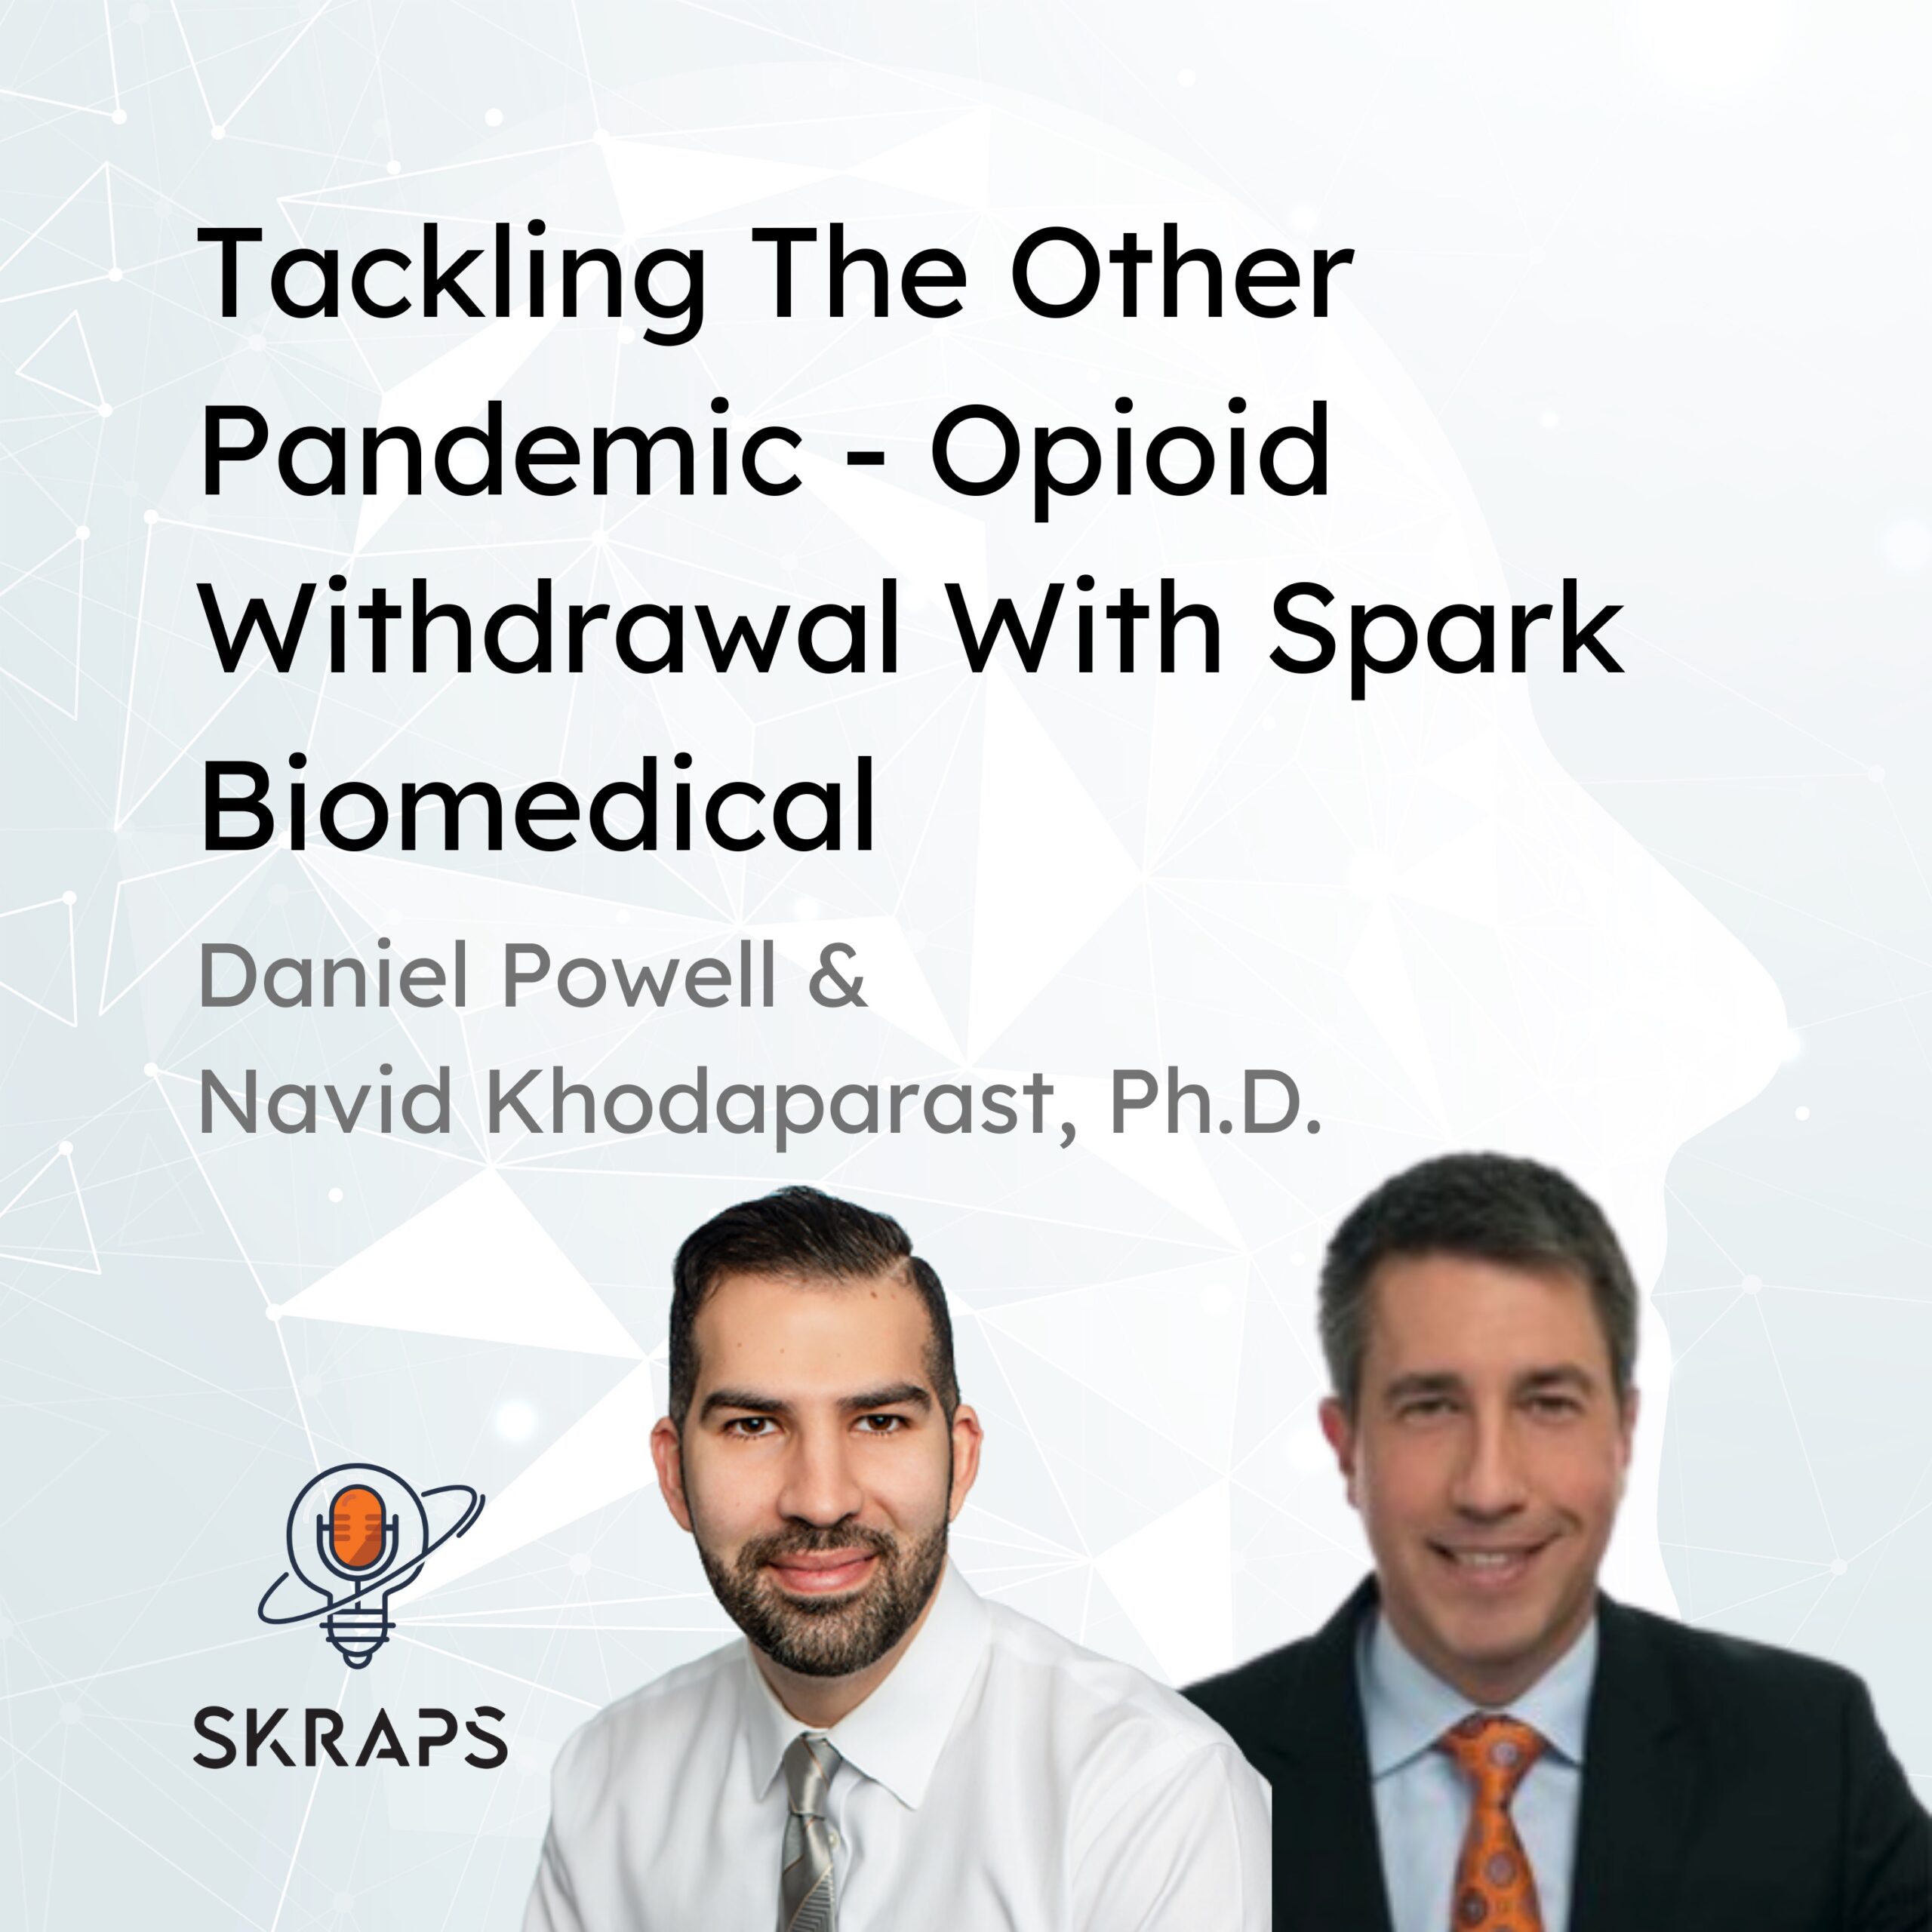 Dan Powell and Navid Khodaparast on Skraps